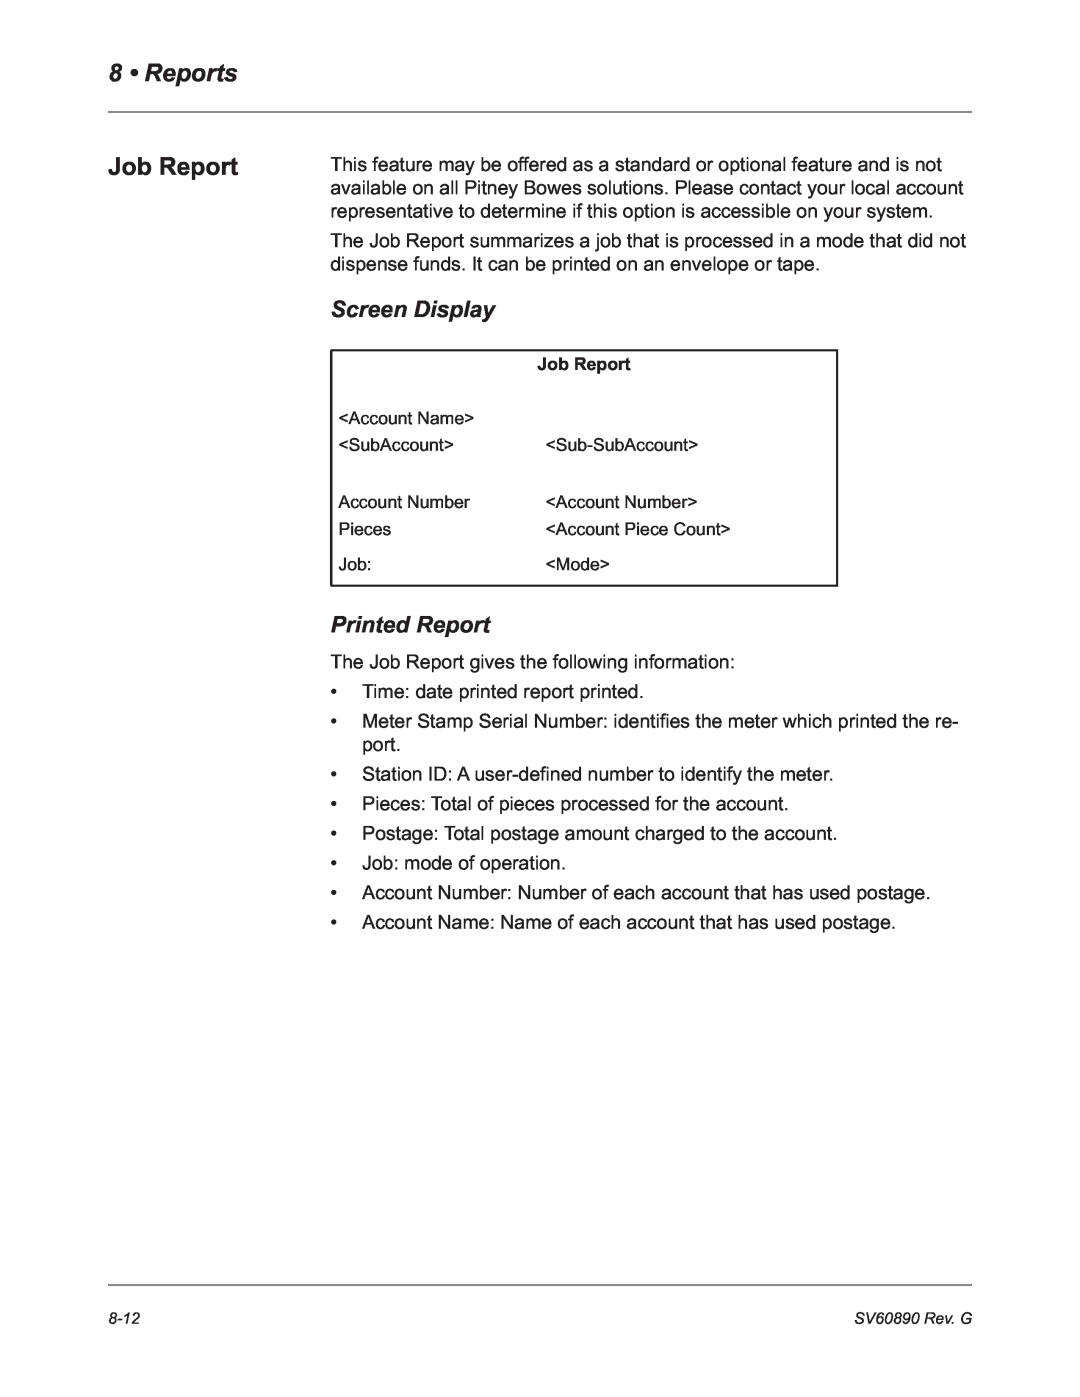 Pitney Bowes DM550, DM500 manual Job Report, Reports, Screen Display, Printed Report 